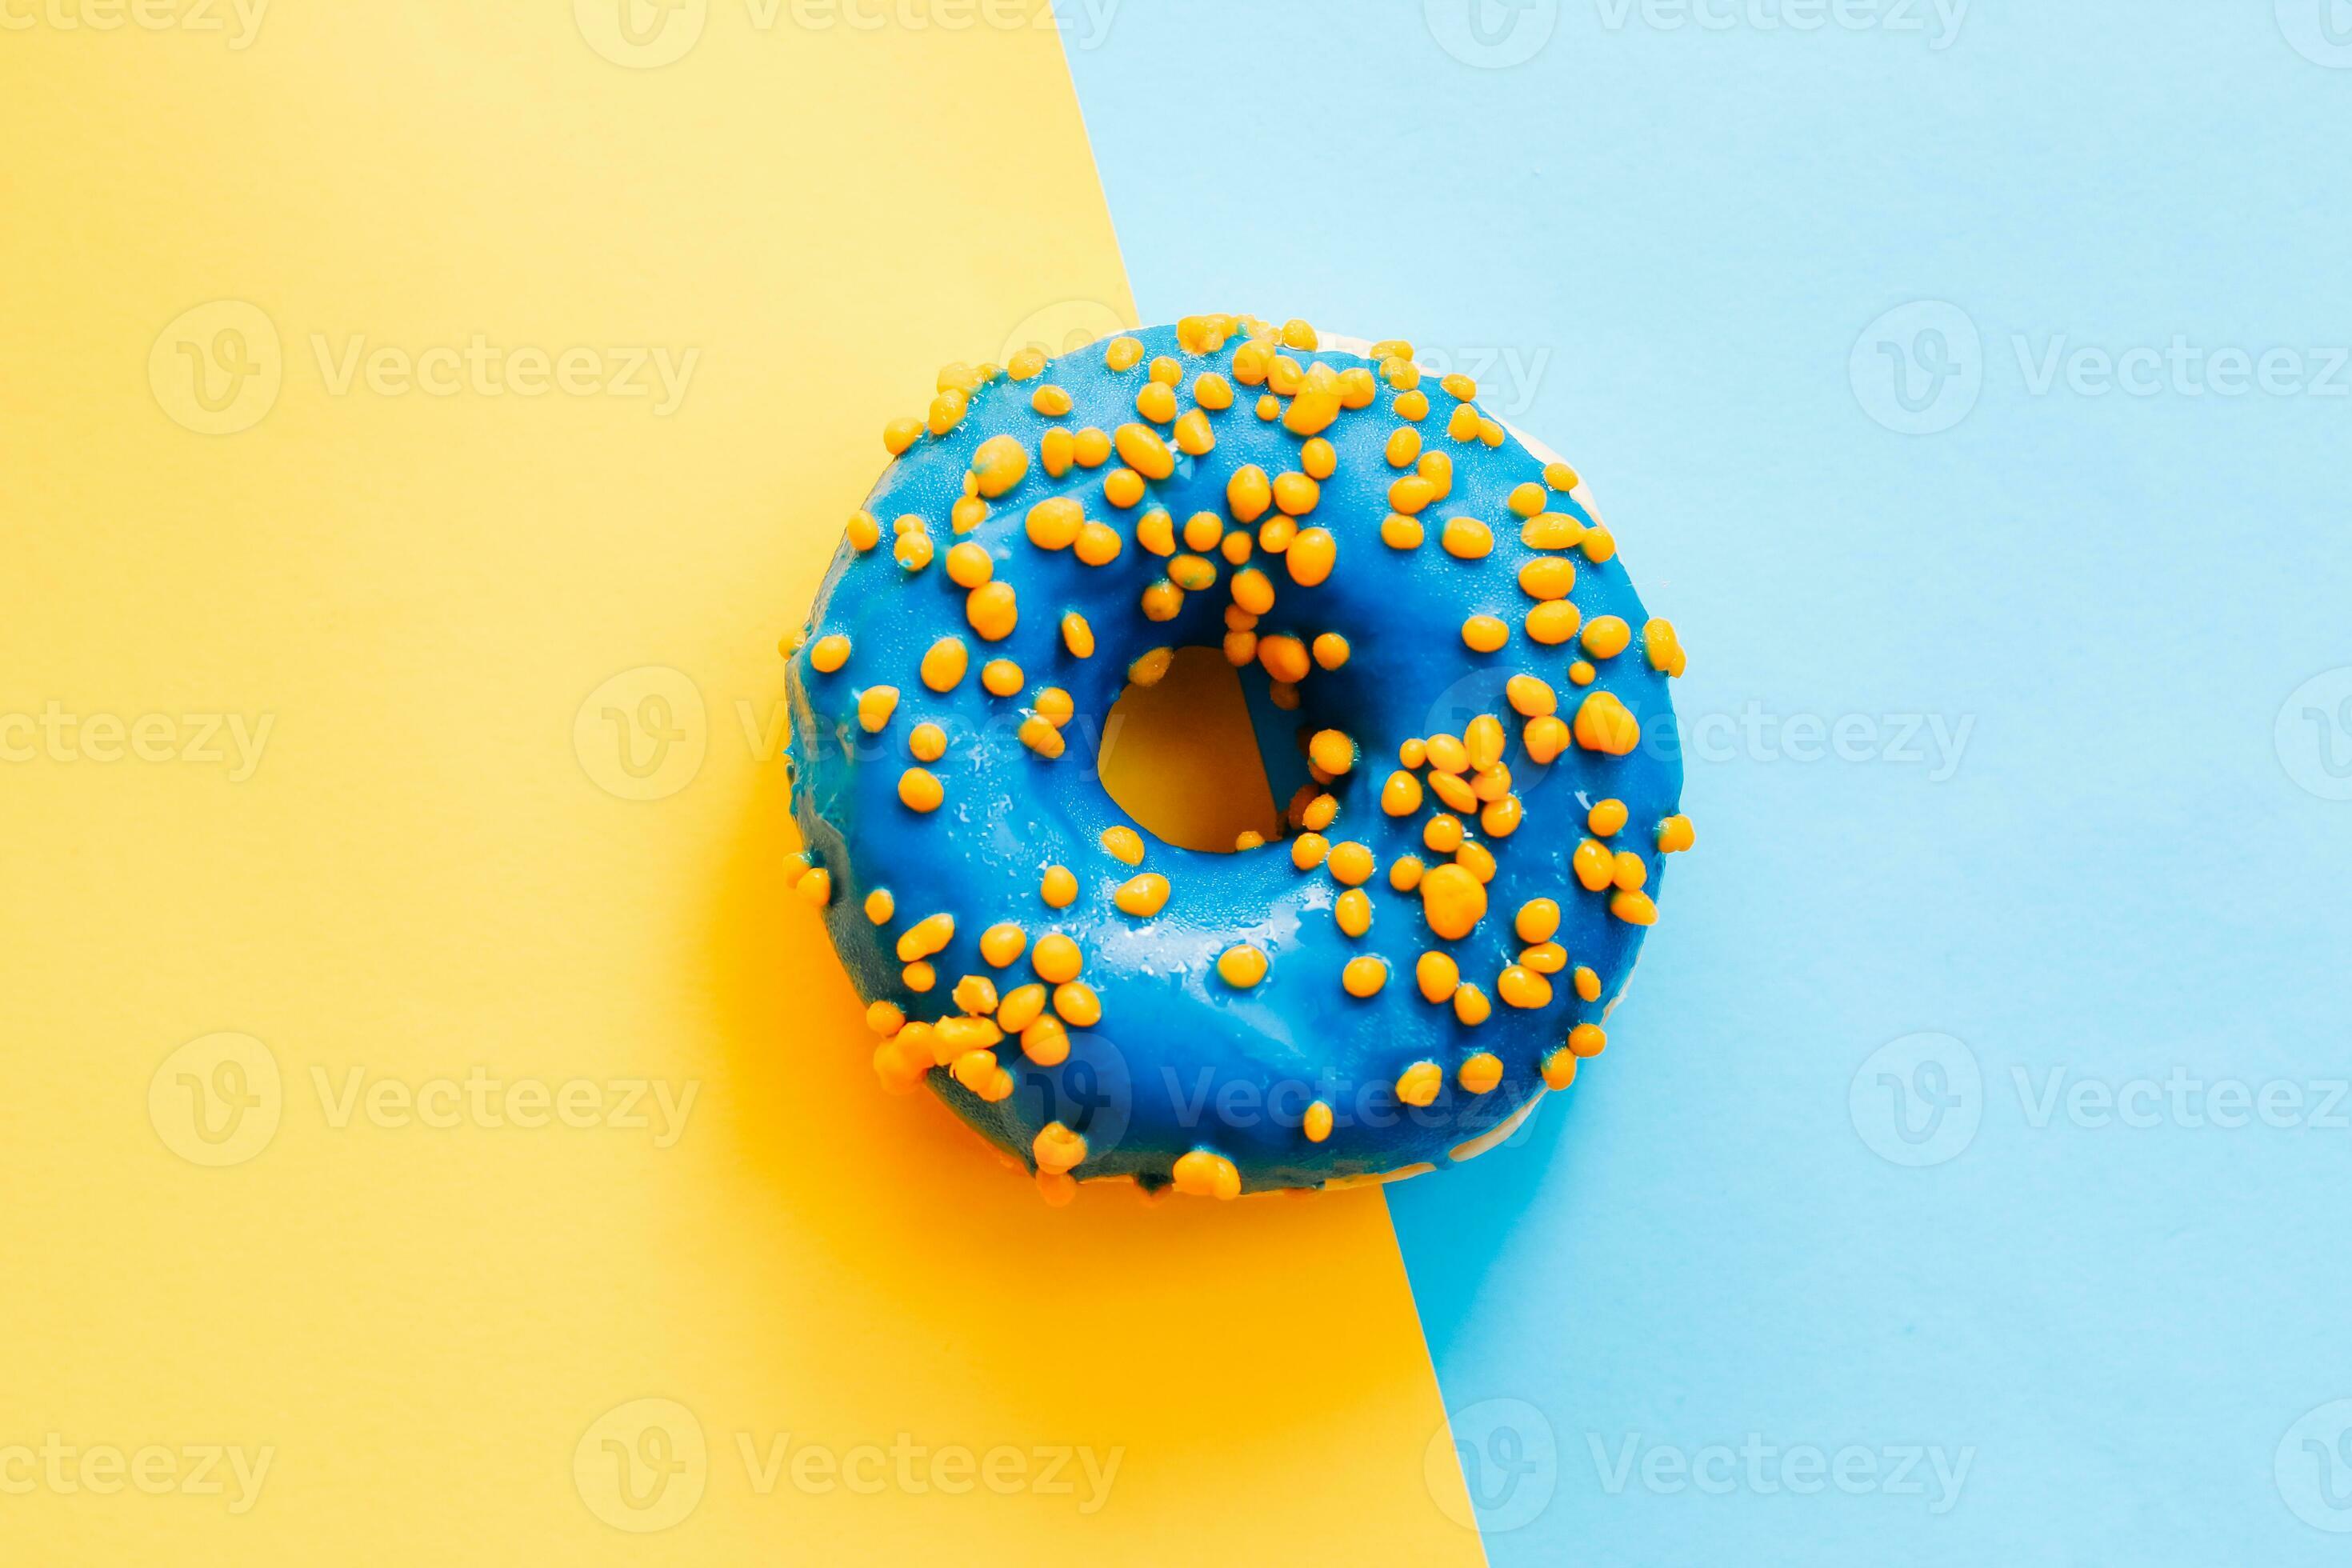 blue-yellow-glaze-donut-on-blue-yellow-paper-photo.JPG